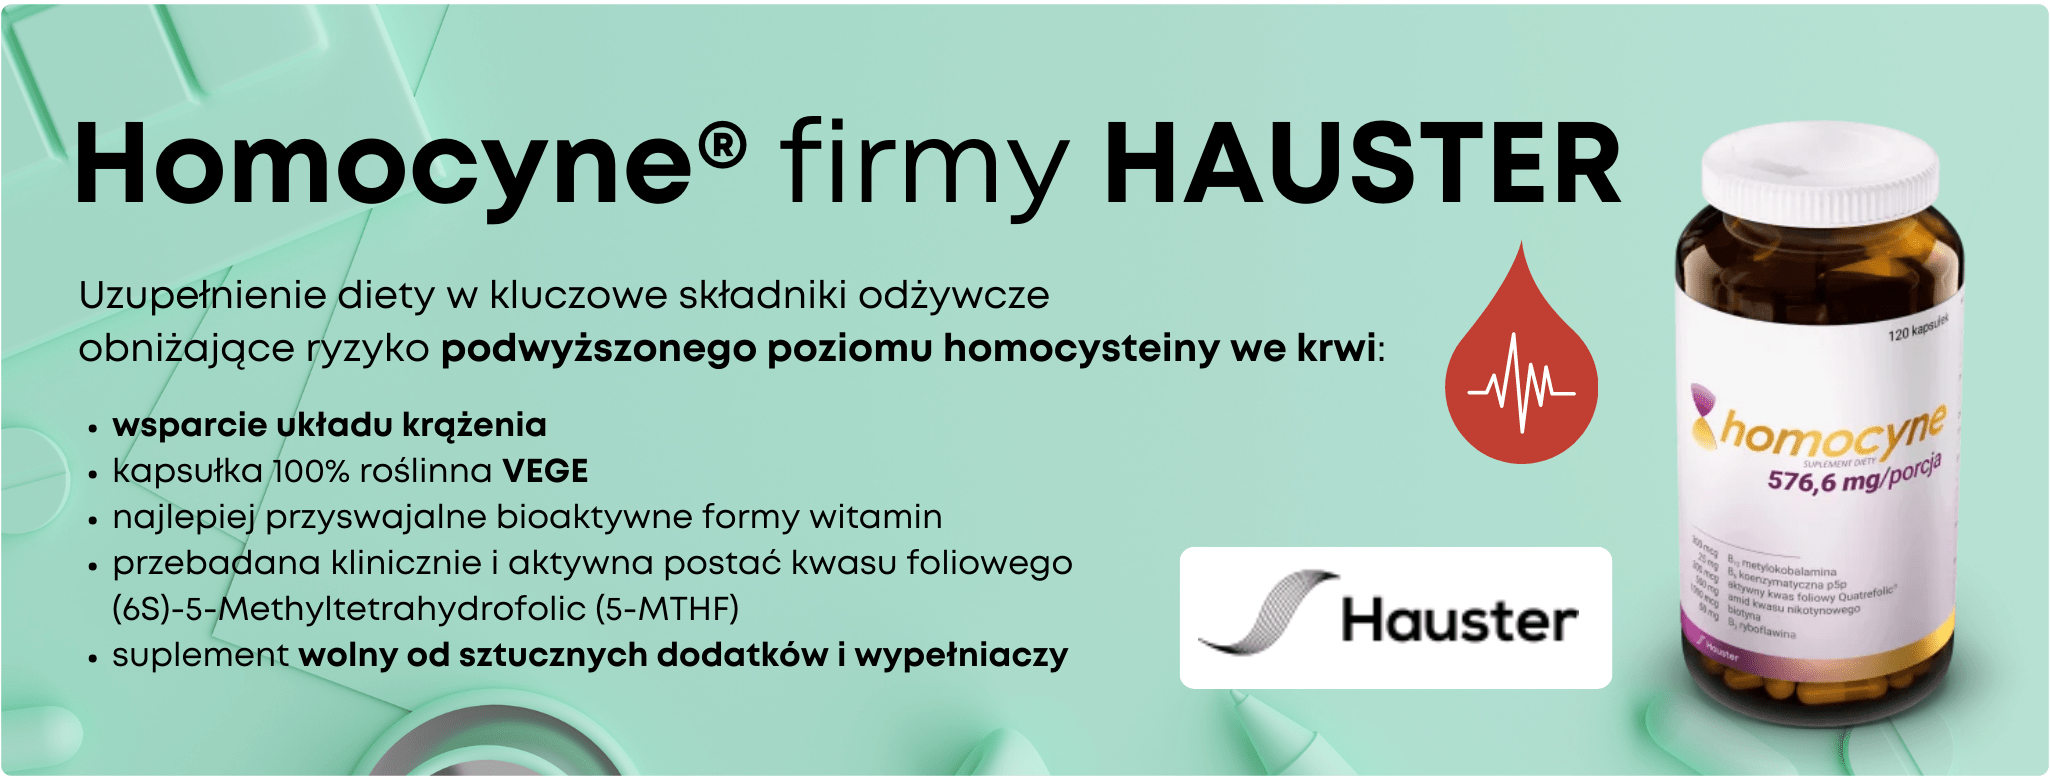 Homocyne Hauster